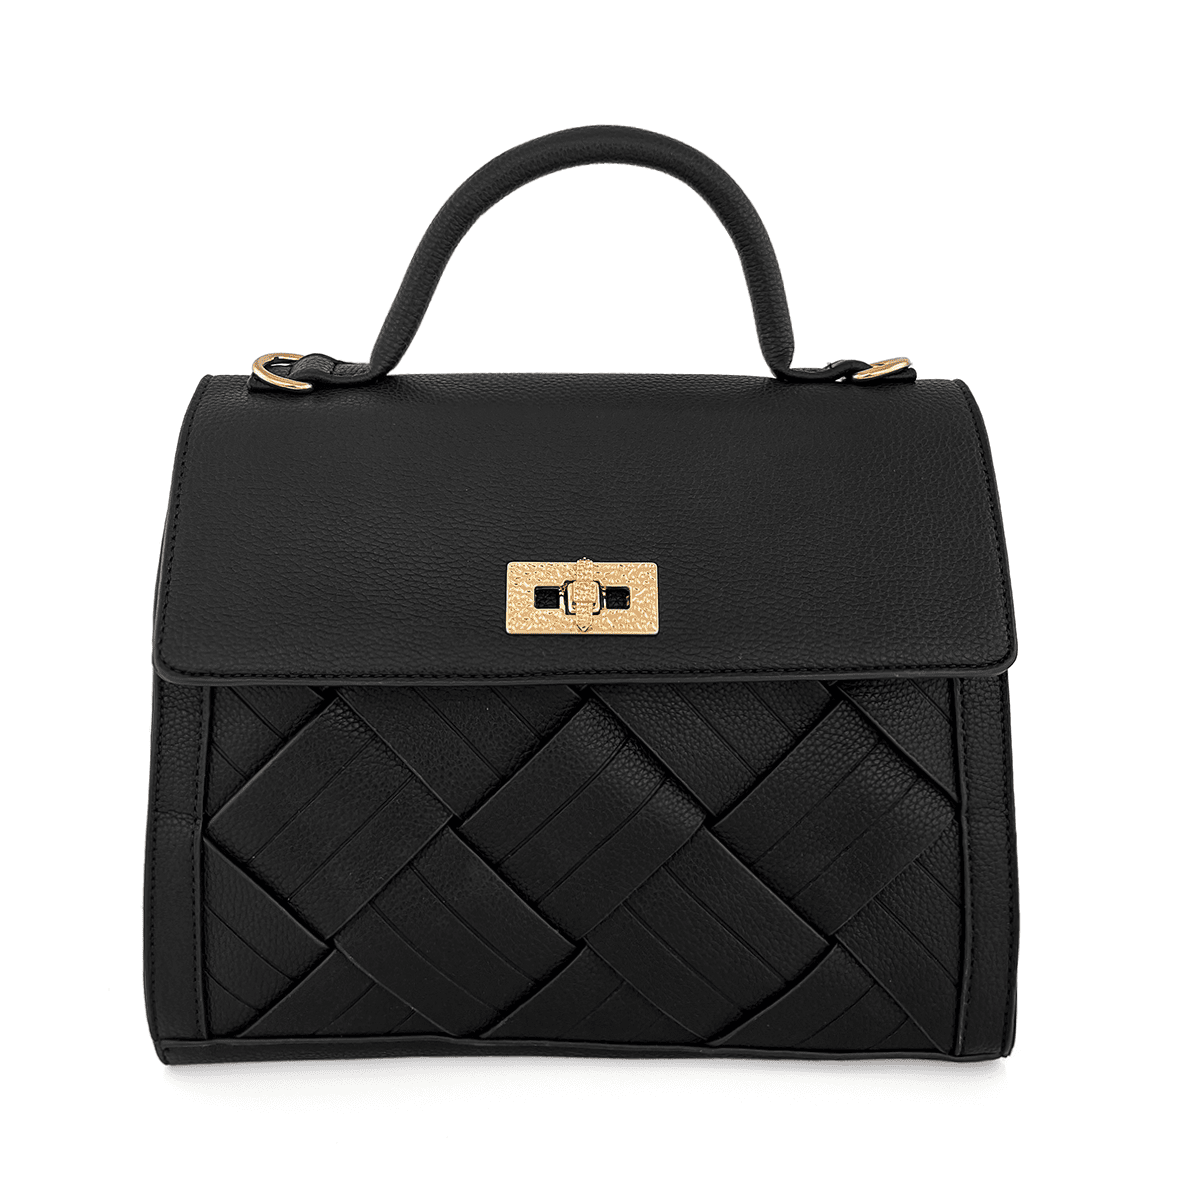 Луксозна дамска чанта Bellisima - черна 